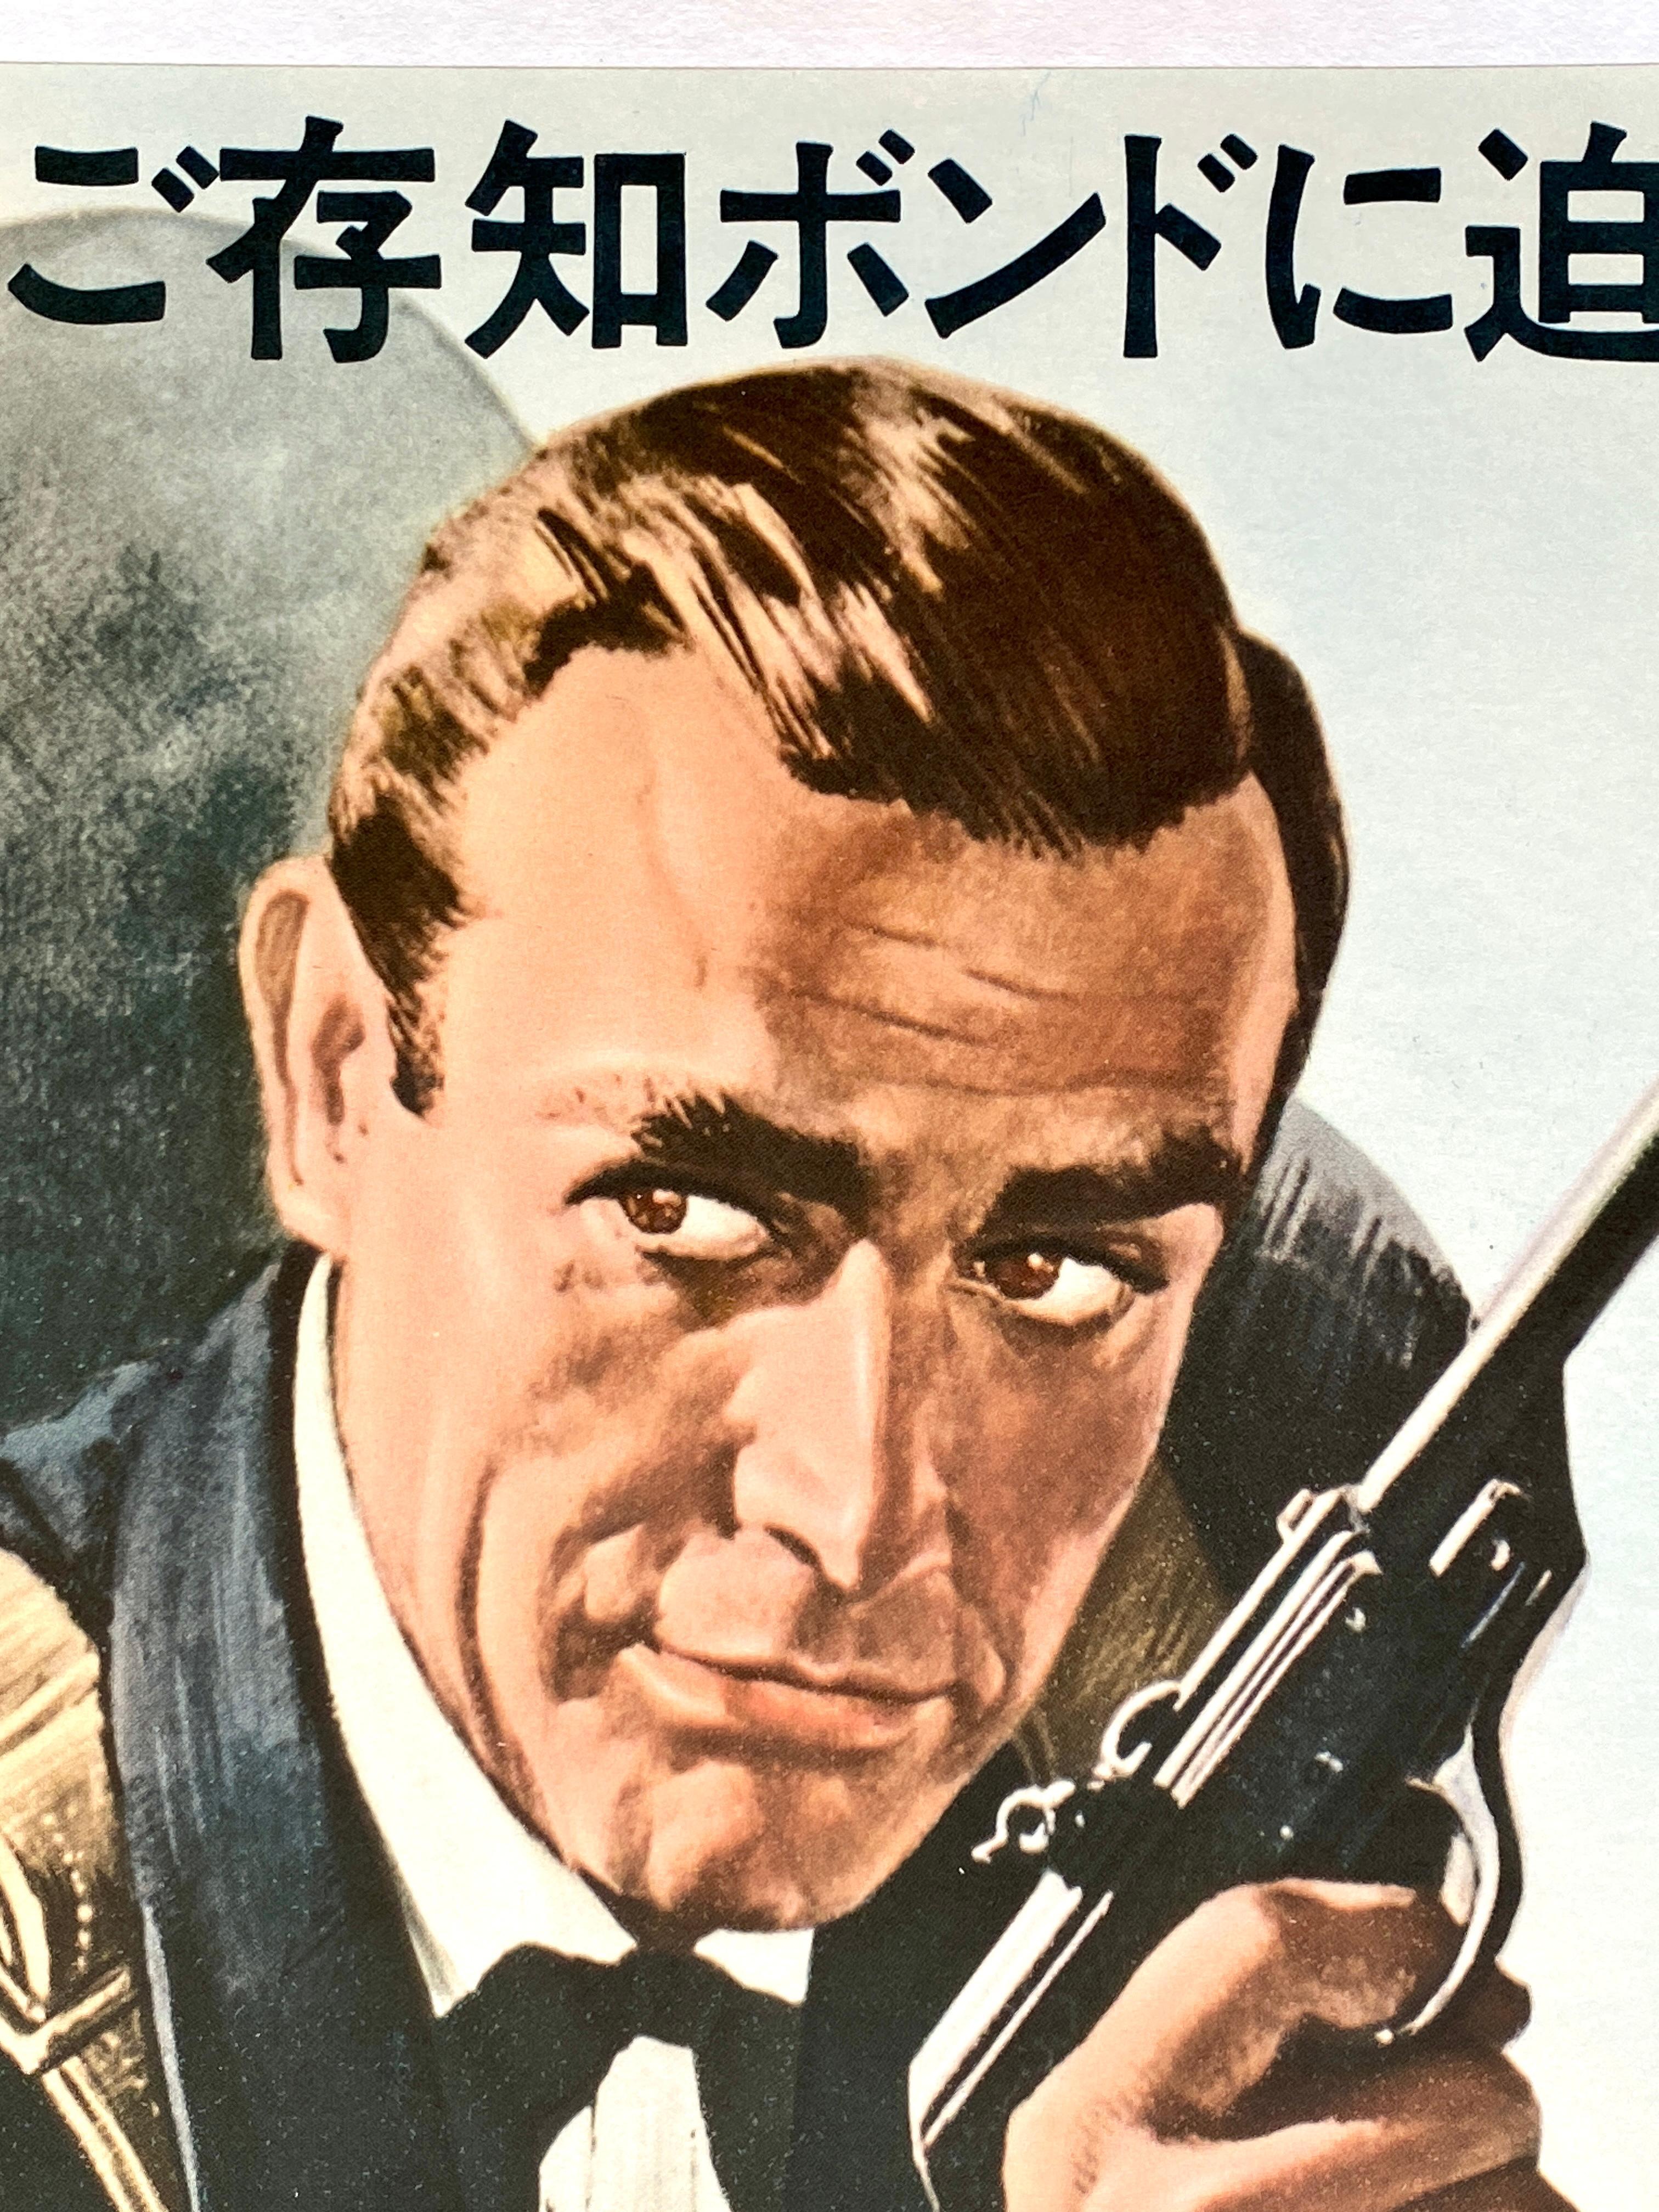 James Bond 'Thunderball' Original Vintage Movie Poster, Japanese, 1965 For Sale 3